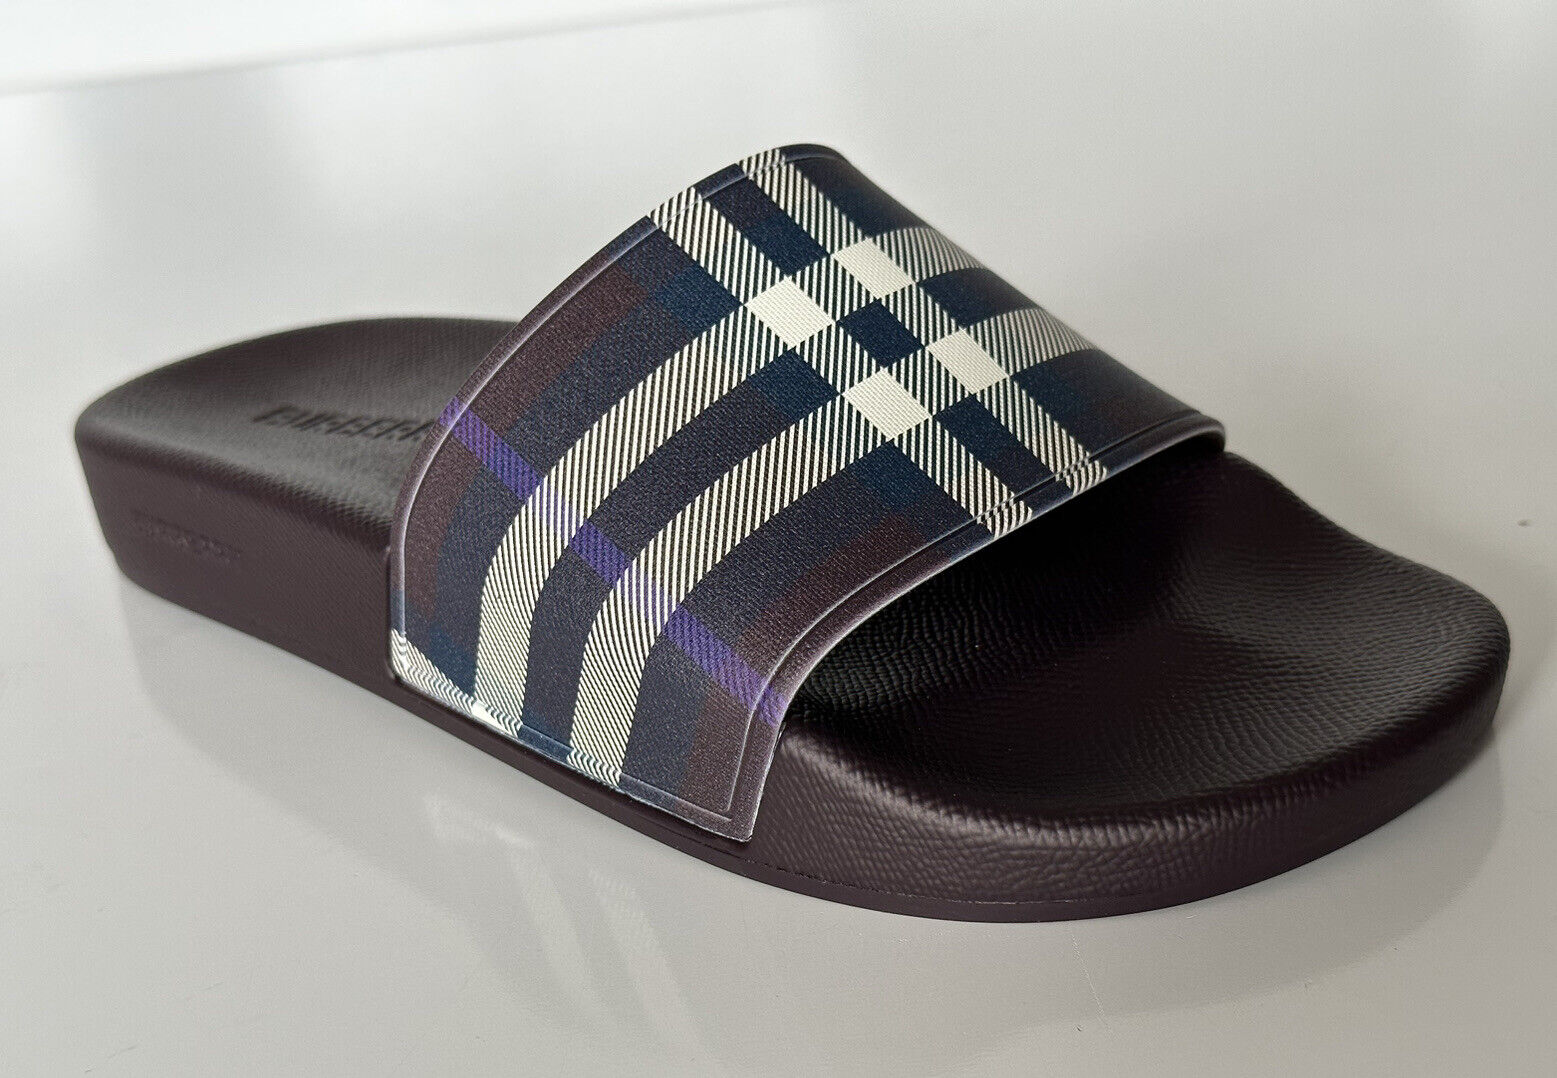 NIB $370 Burberry Women’s Furley Check Maroon Slide Sandals 9 US (39 Eu) 8057612